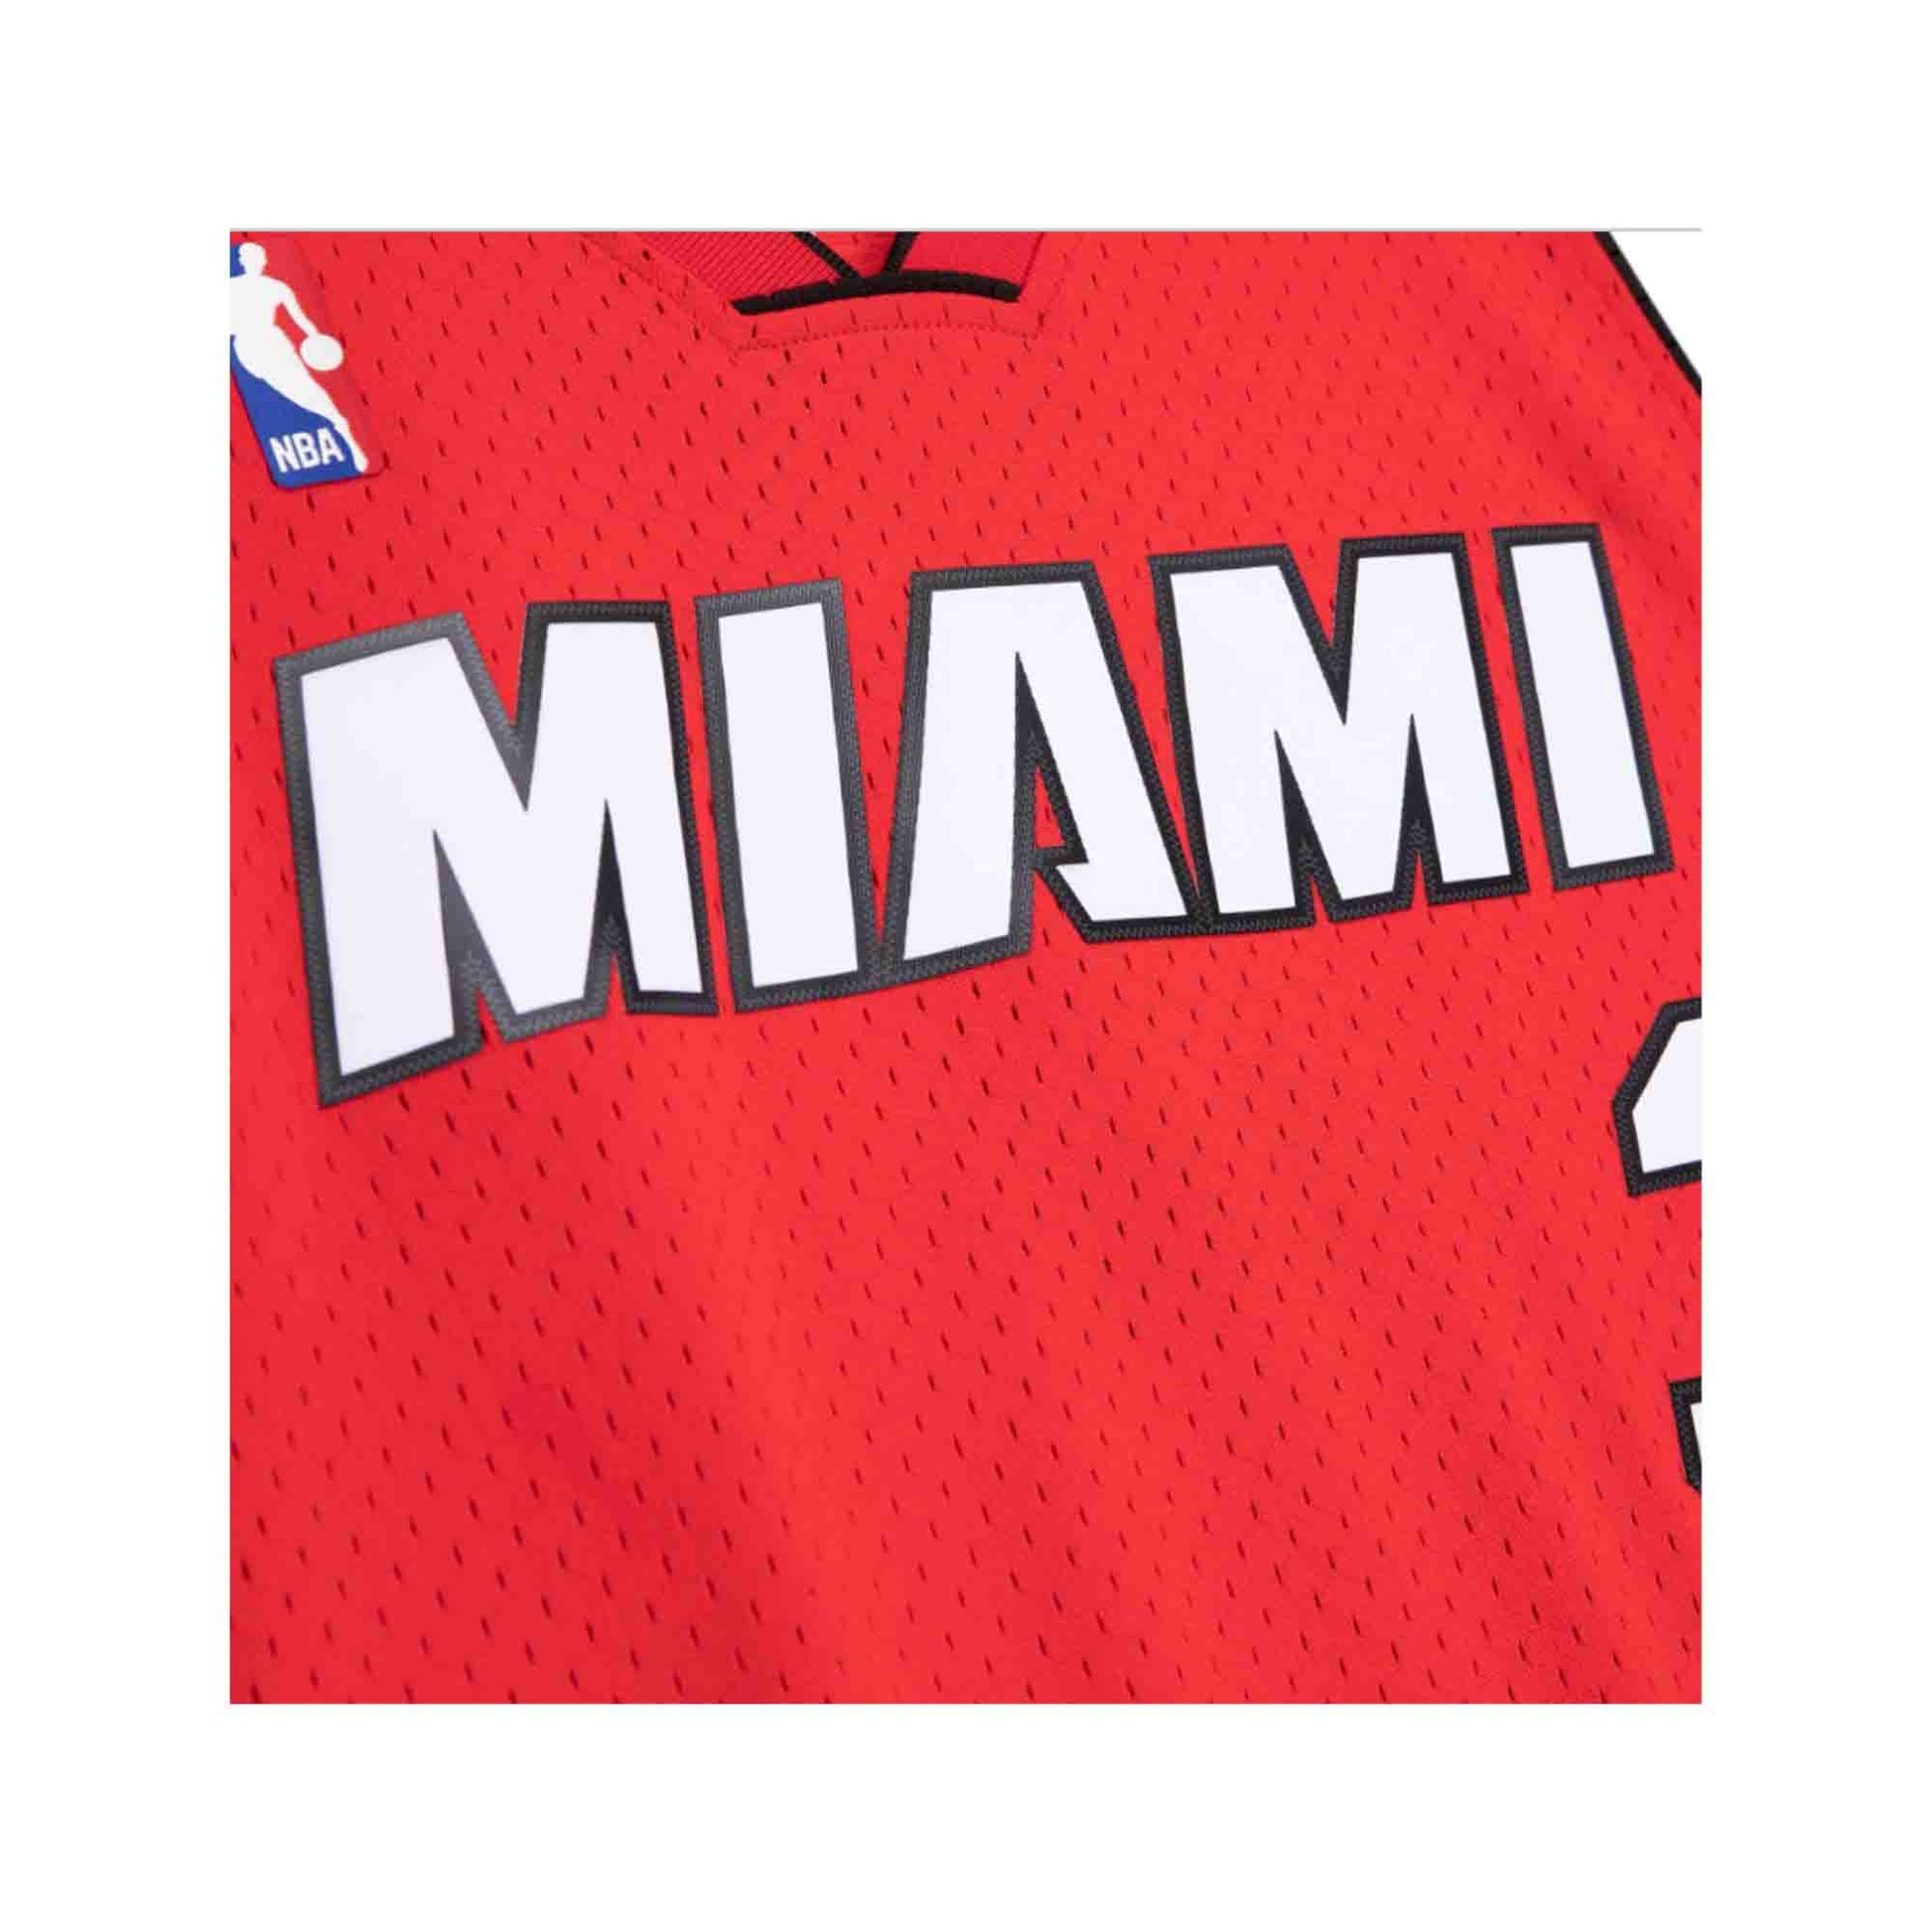 Authentic Adidas Men's NBA Heat Alternate Swingman Jersey - S